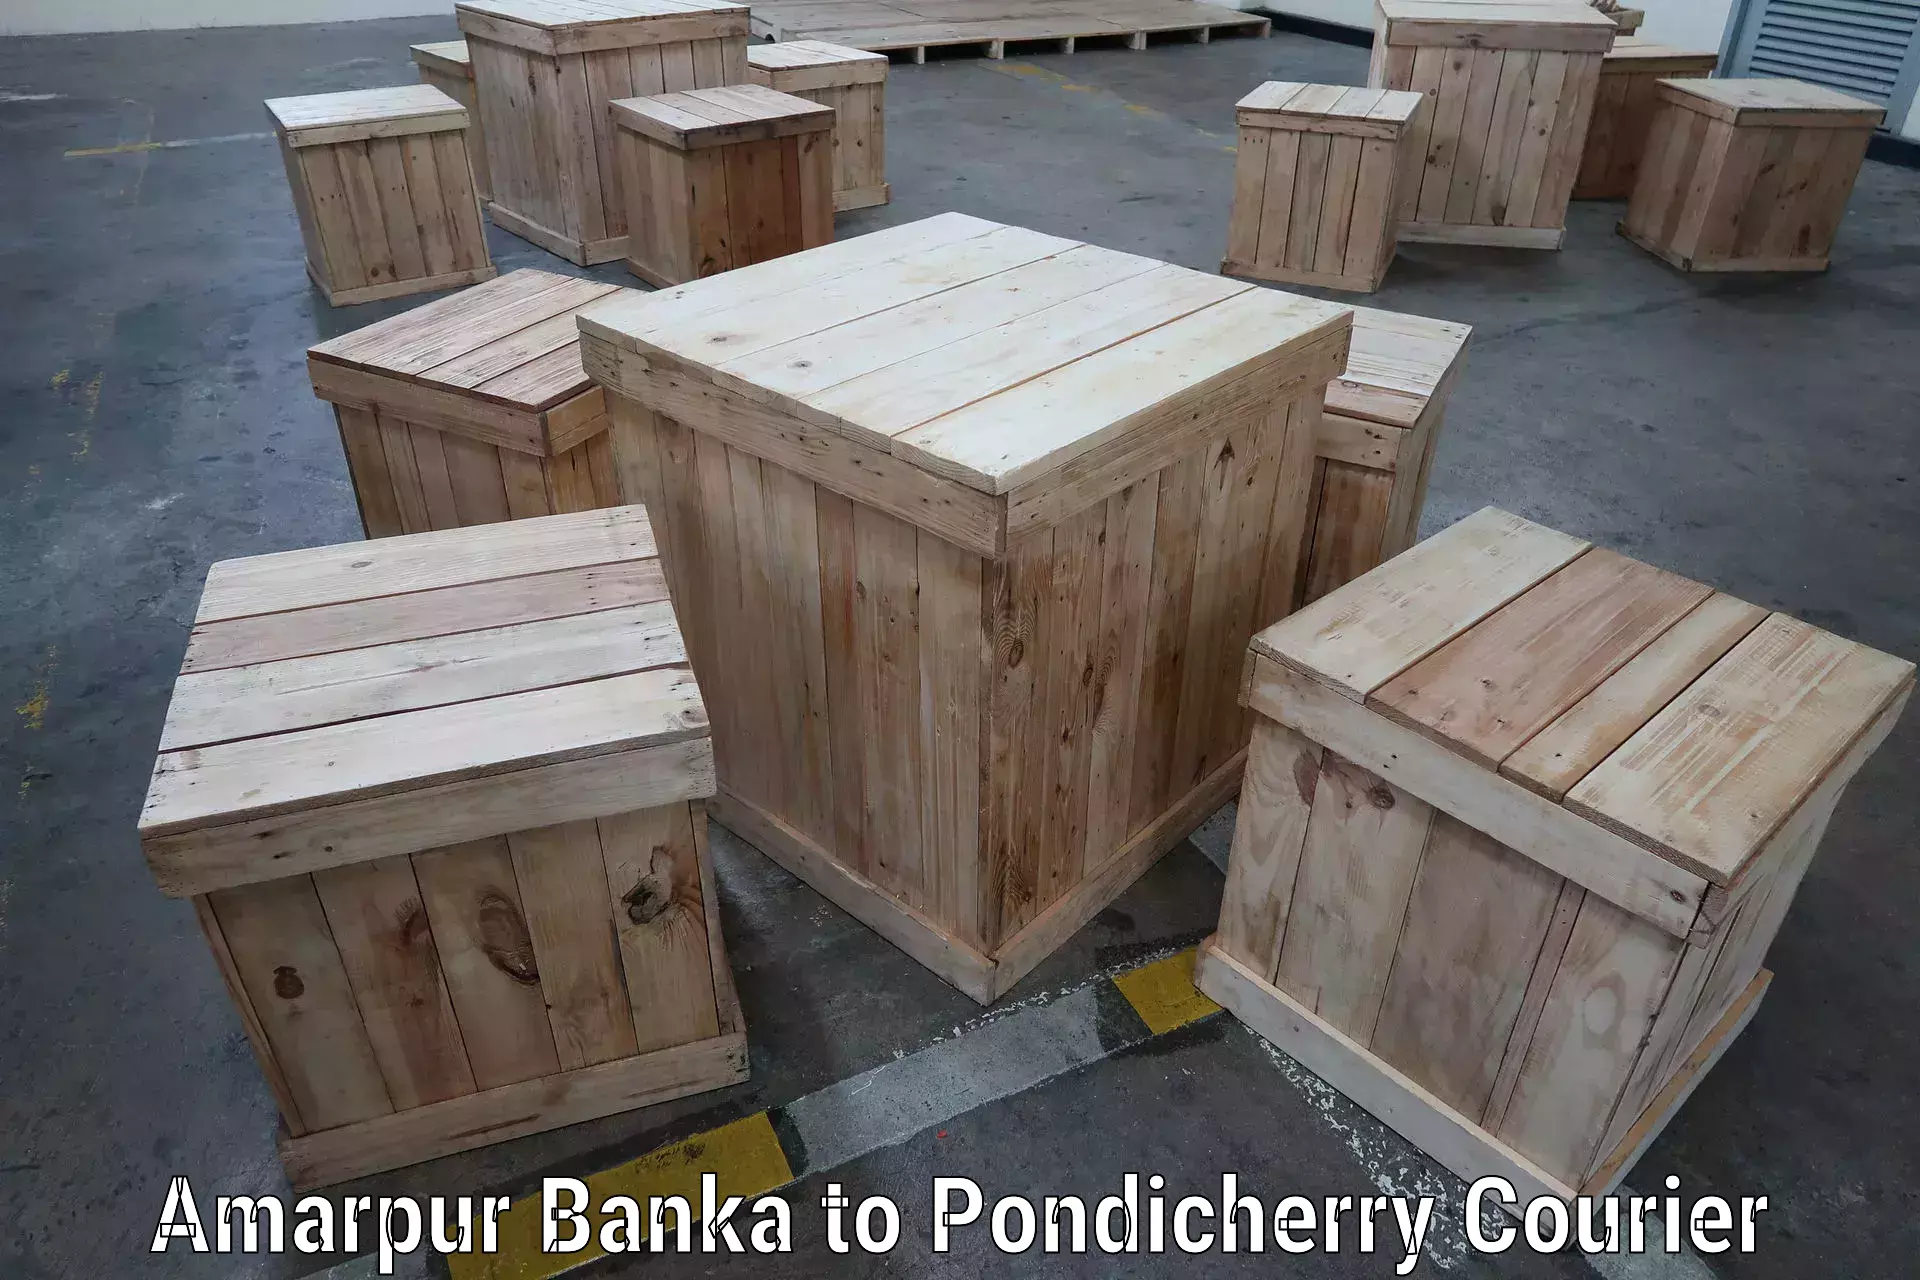 24-hour courier service Amarpur Banka to Pondicherry